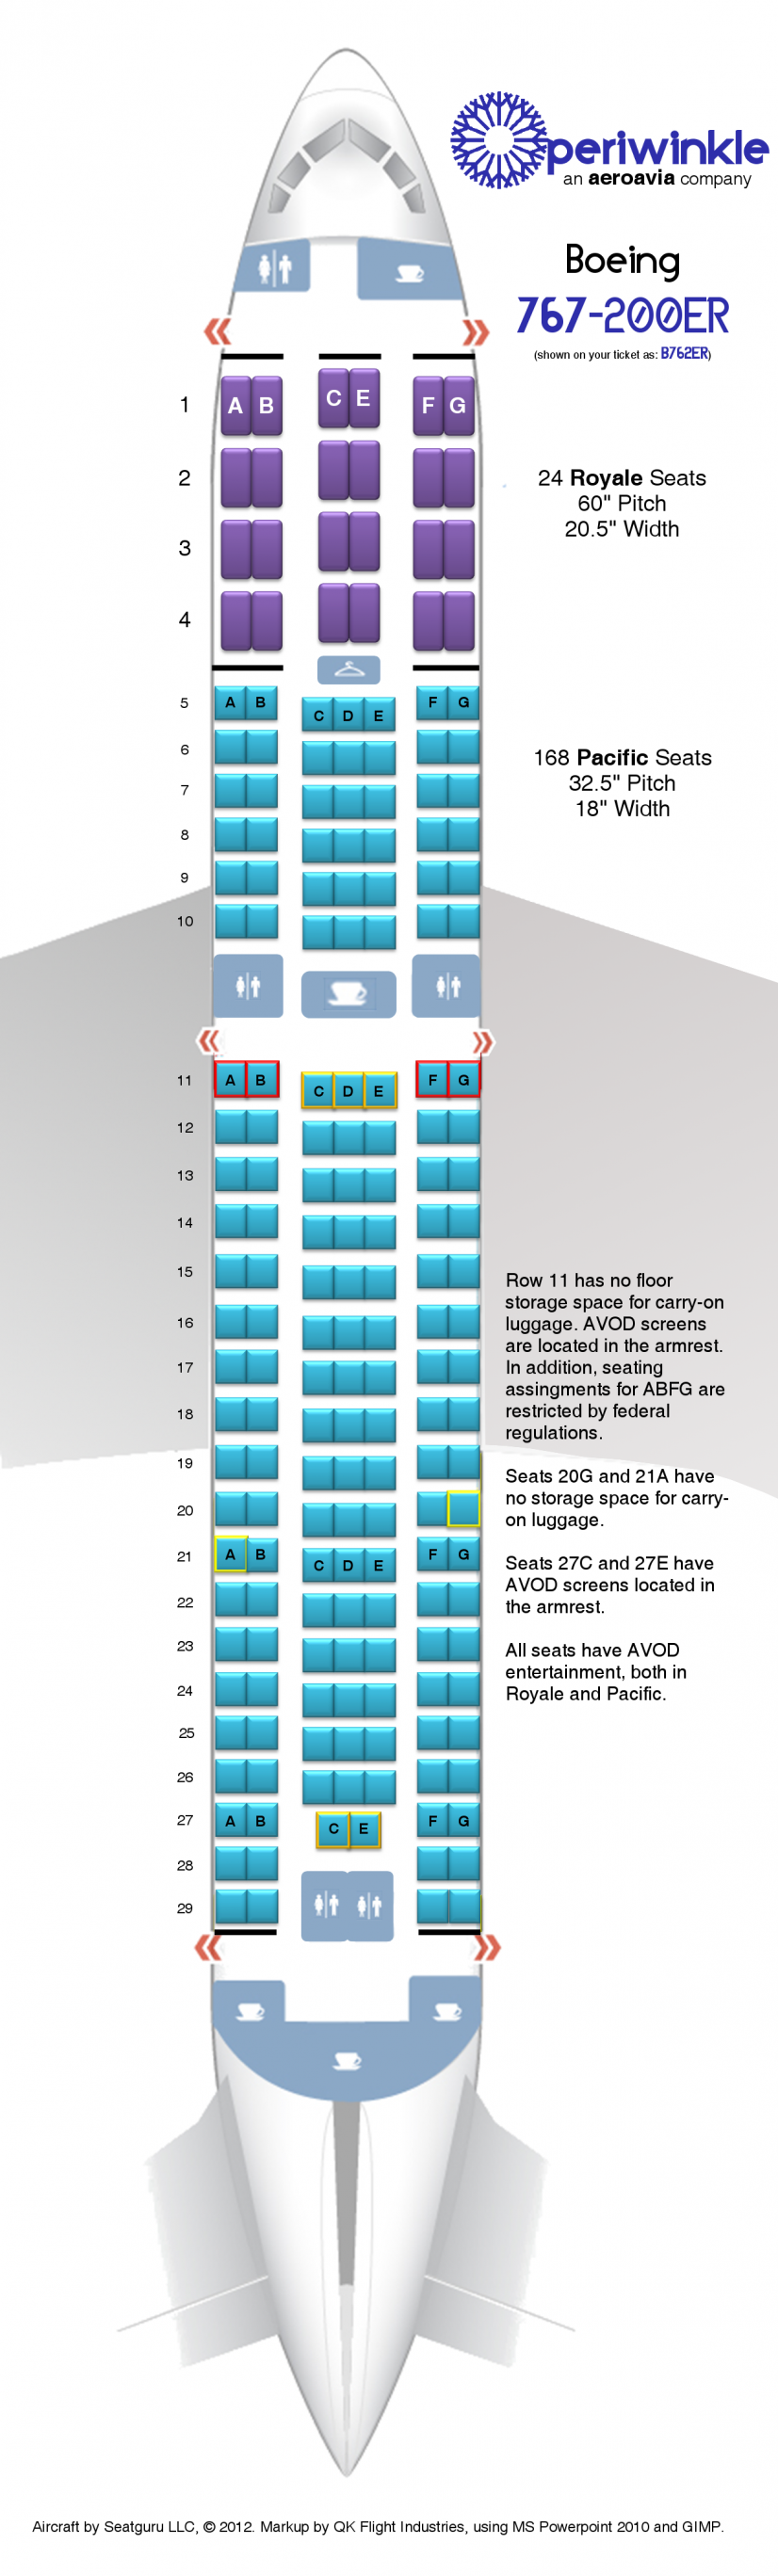 Periwinkle Boeing Er Aircraft Seating Chart Aeroavia Seat Maps Sexiz Pix